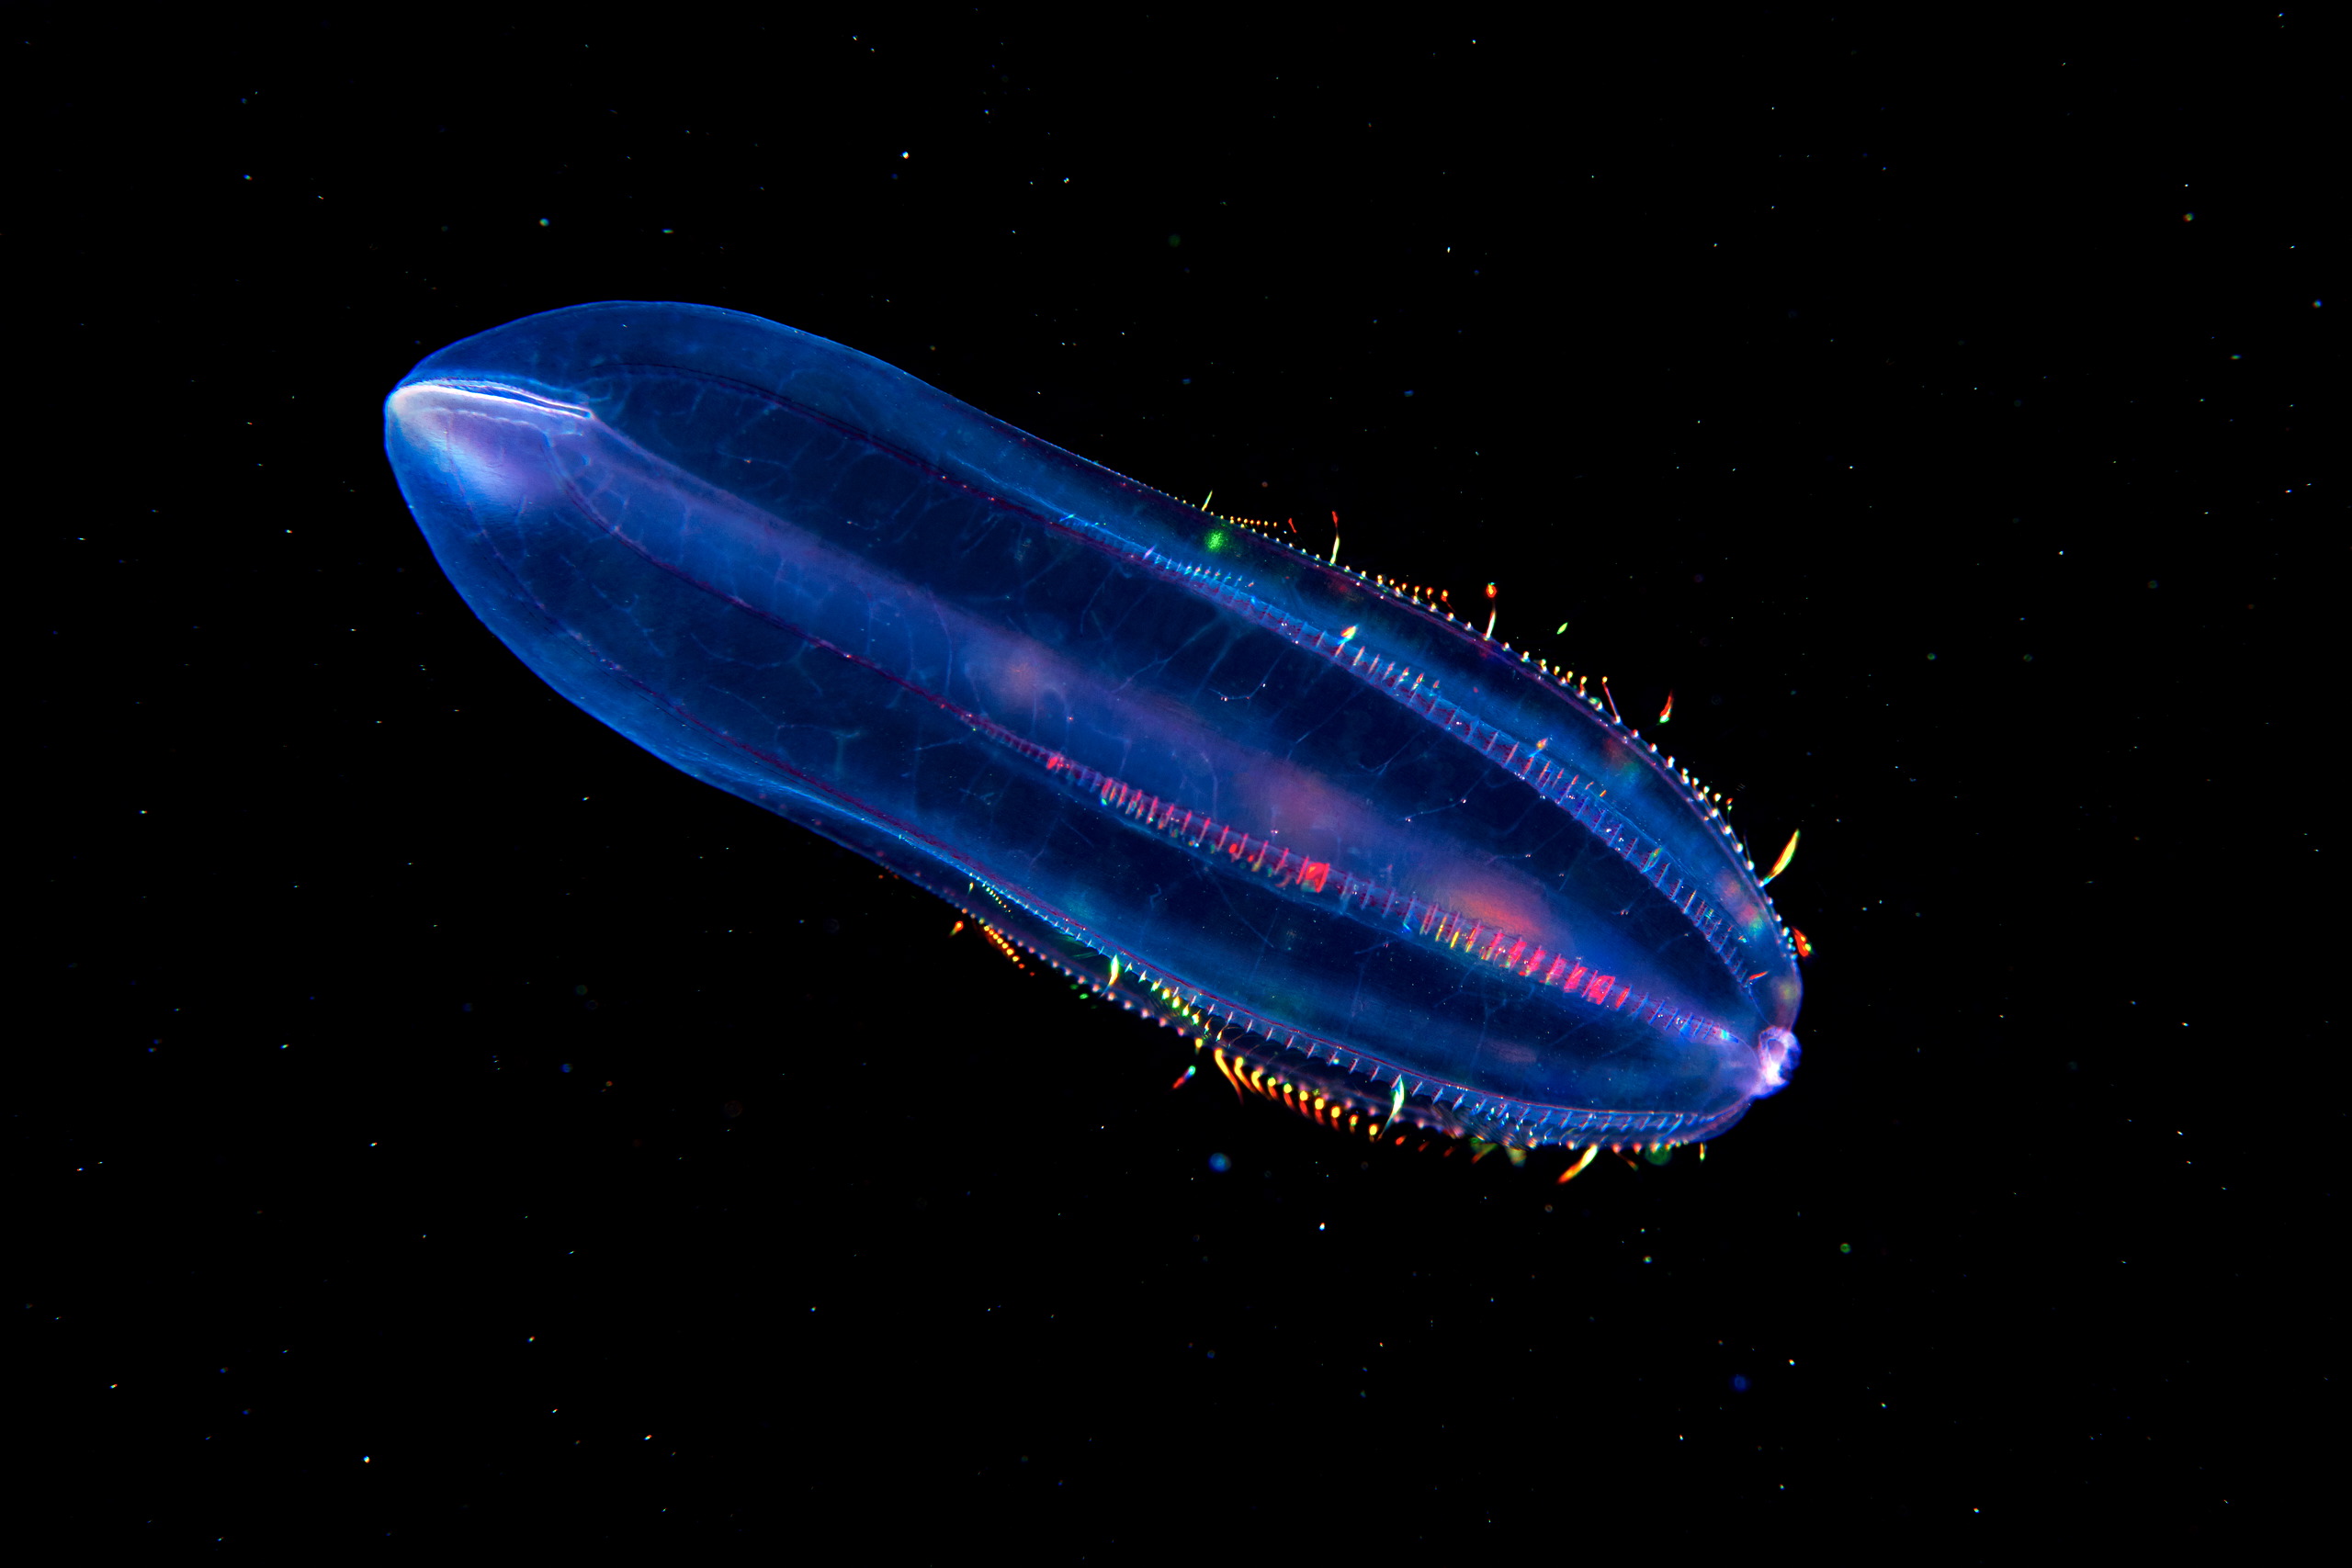 Ctenophora – Comb jelly – Beroe cucumis 03